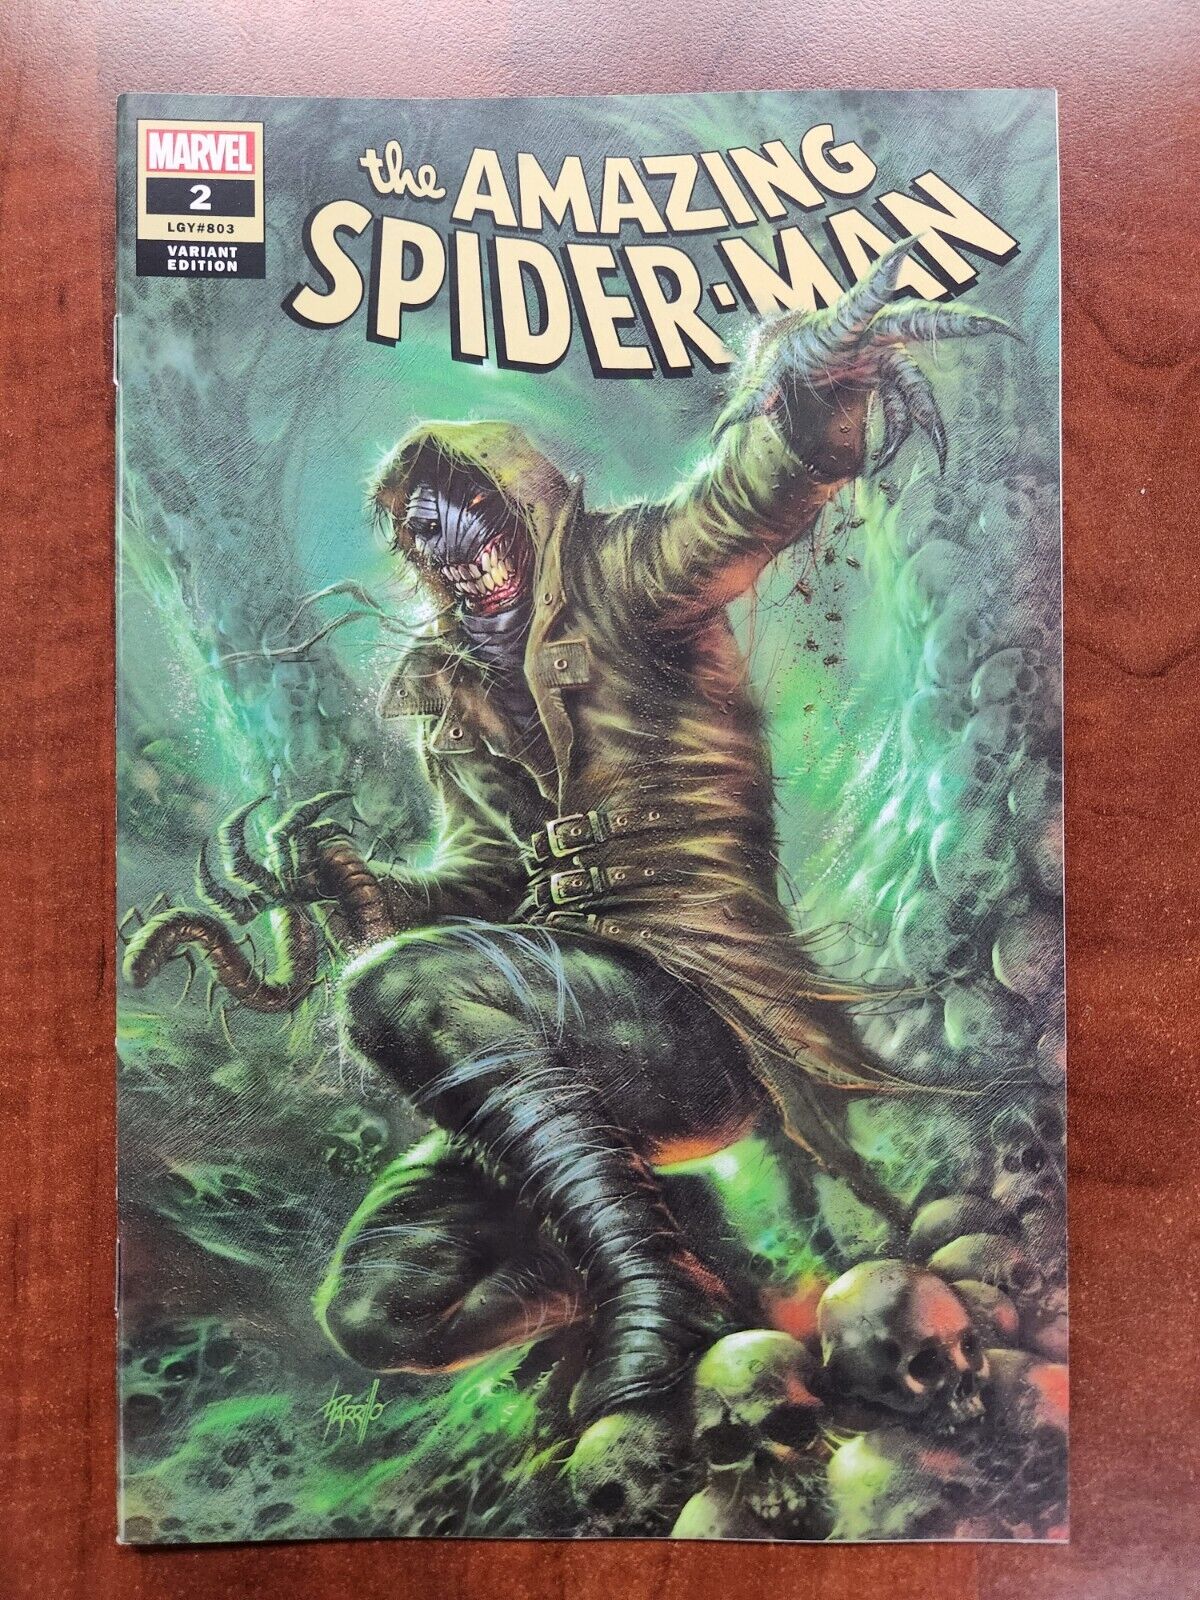 THE AMAZING SPIDER-MAN #2 Parrillo Exclusive Trade Dress Variant Marvel Comics